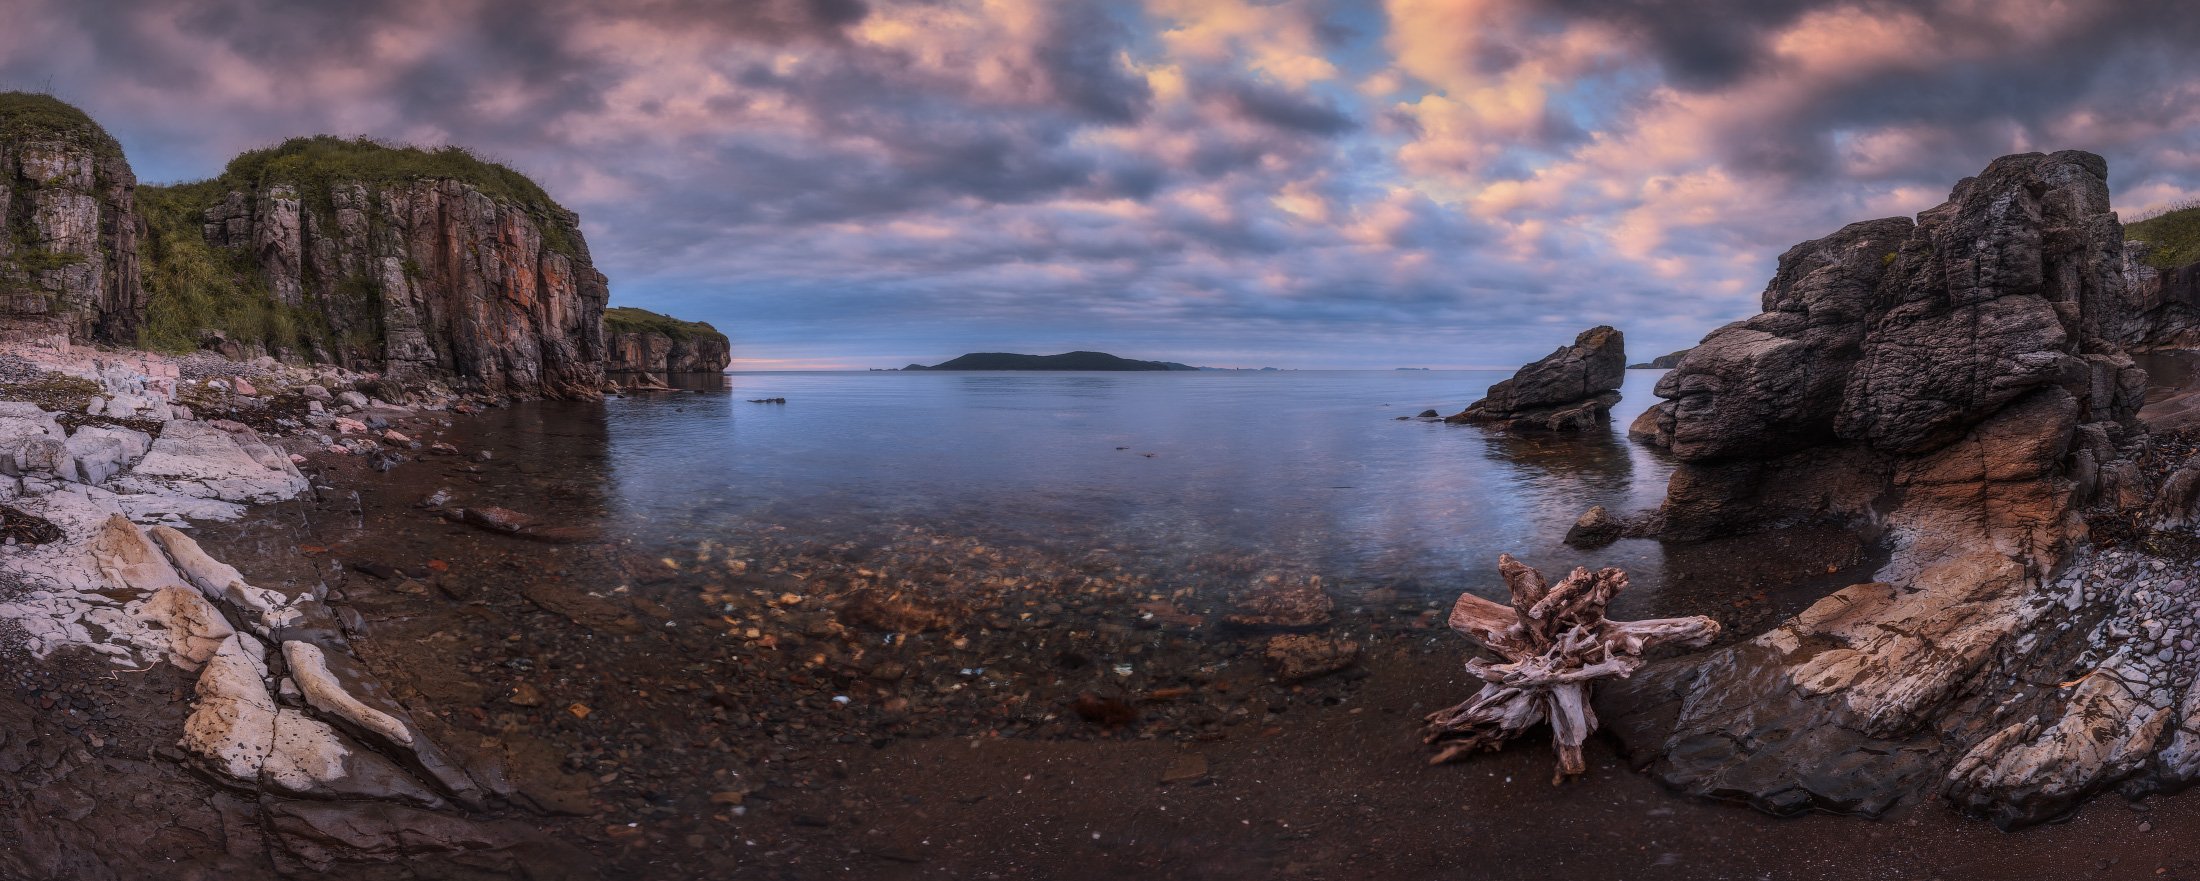 панорама, море, скалы, Андрей Кровлин